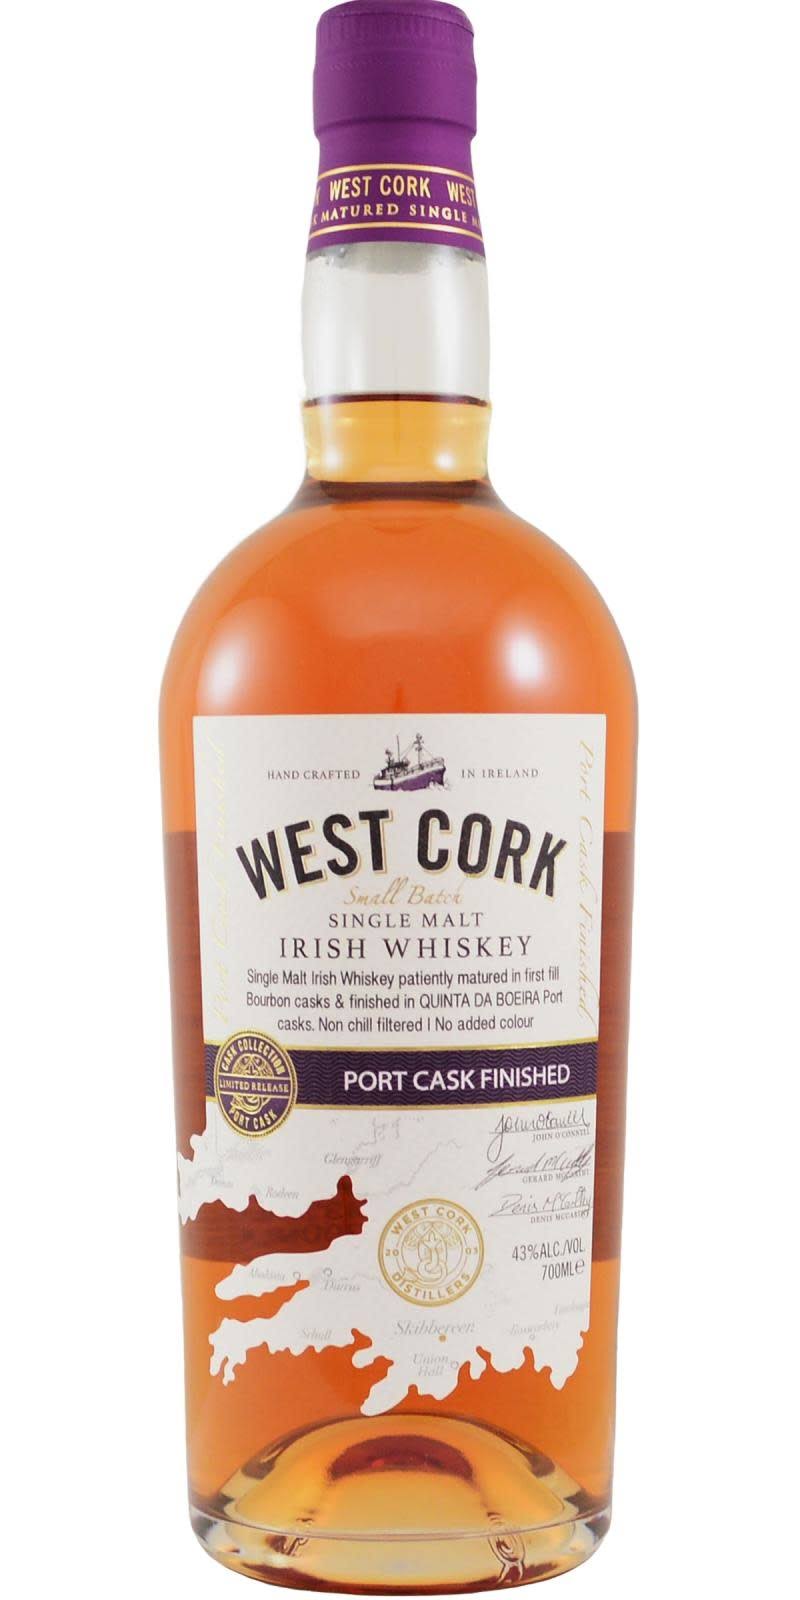 West Cork Single Malt Irish Whiskey Port Cask Finished 43% Vol. 0,7L in Giftbox